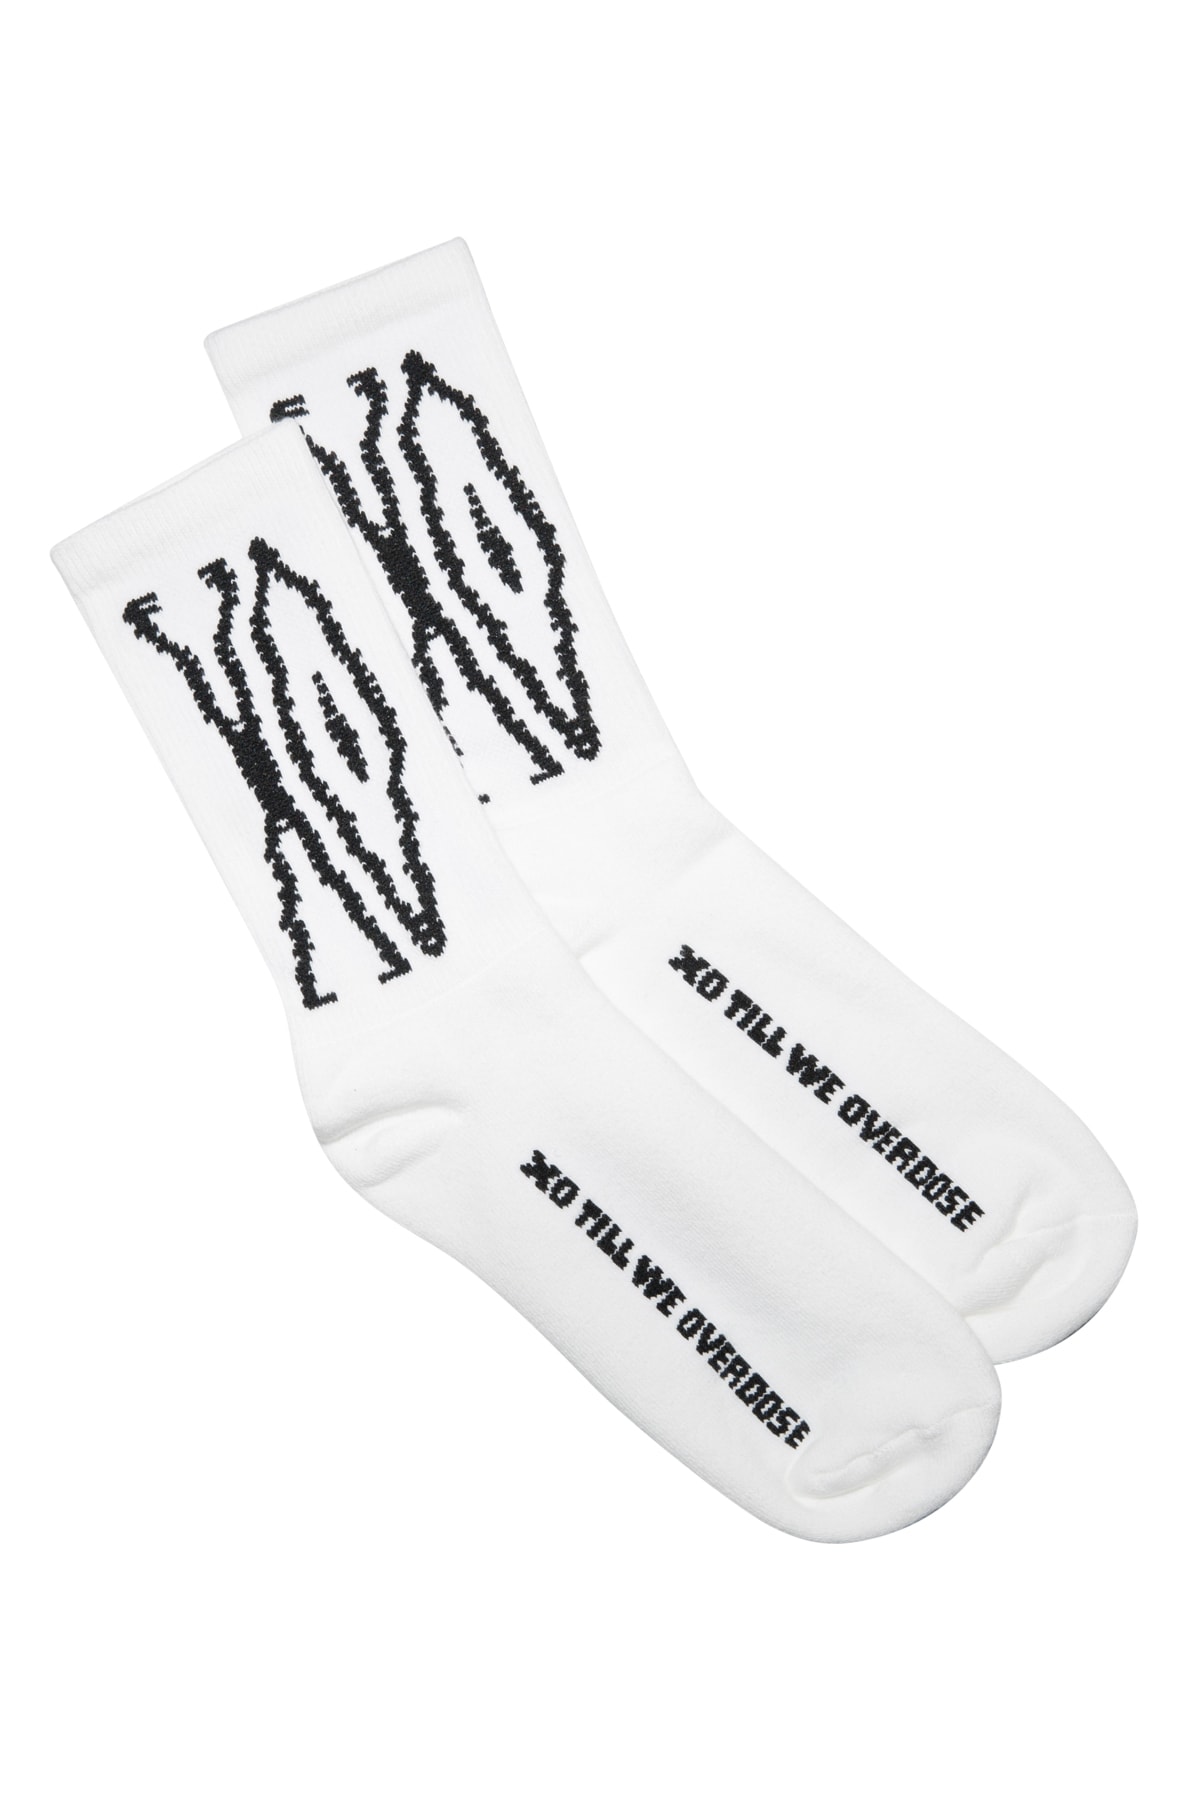 The Weeknd XO Tour Merch Release 004 Scanners Logo Socks White